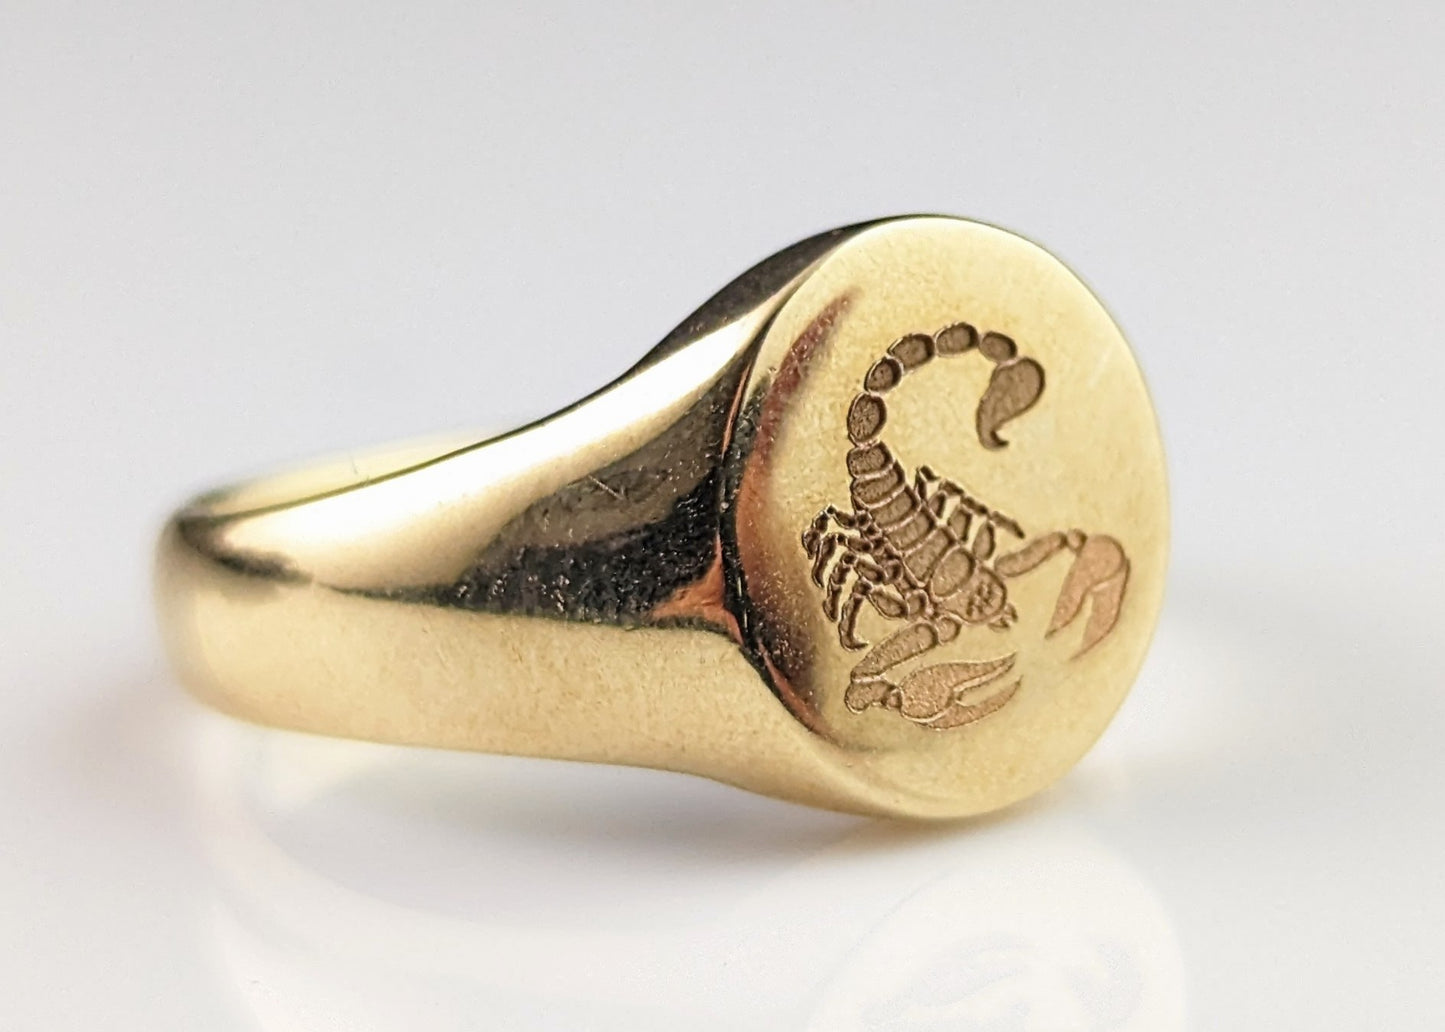 Vintage 9ct gold signet ring, Scorpion, heavy